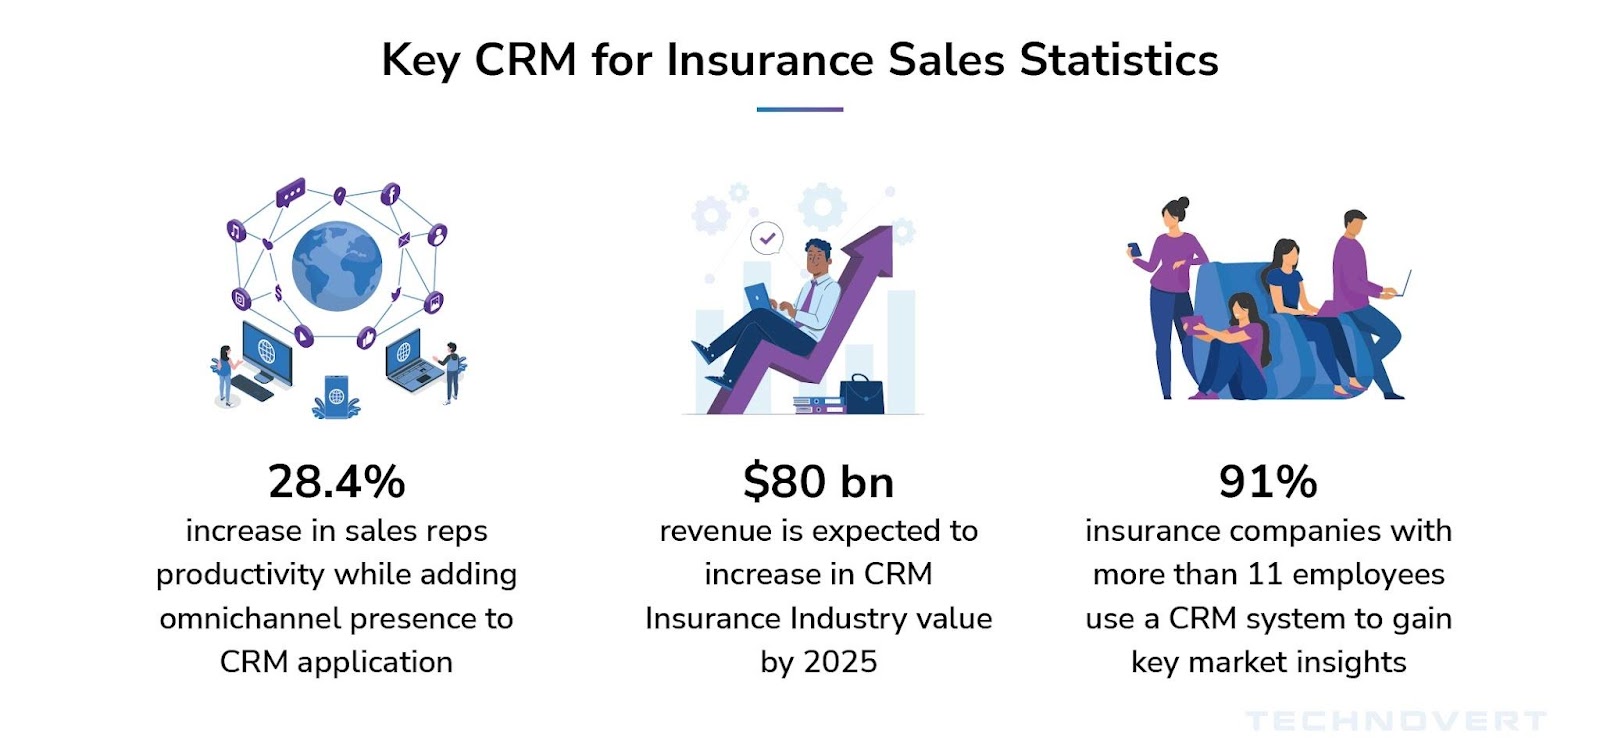 Key crm for insurance sales statistics